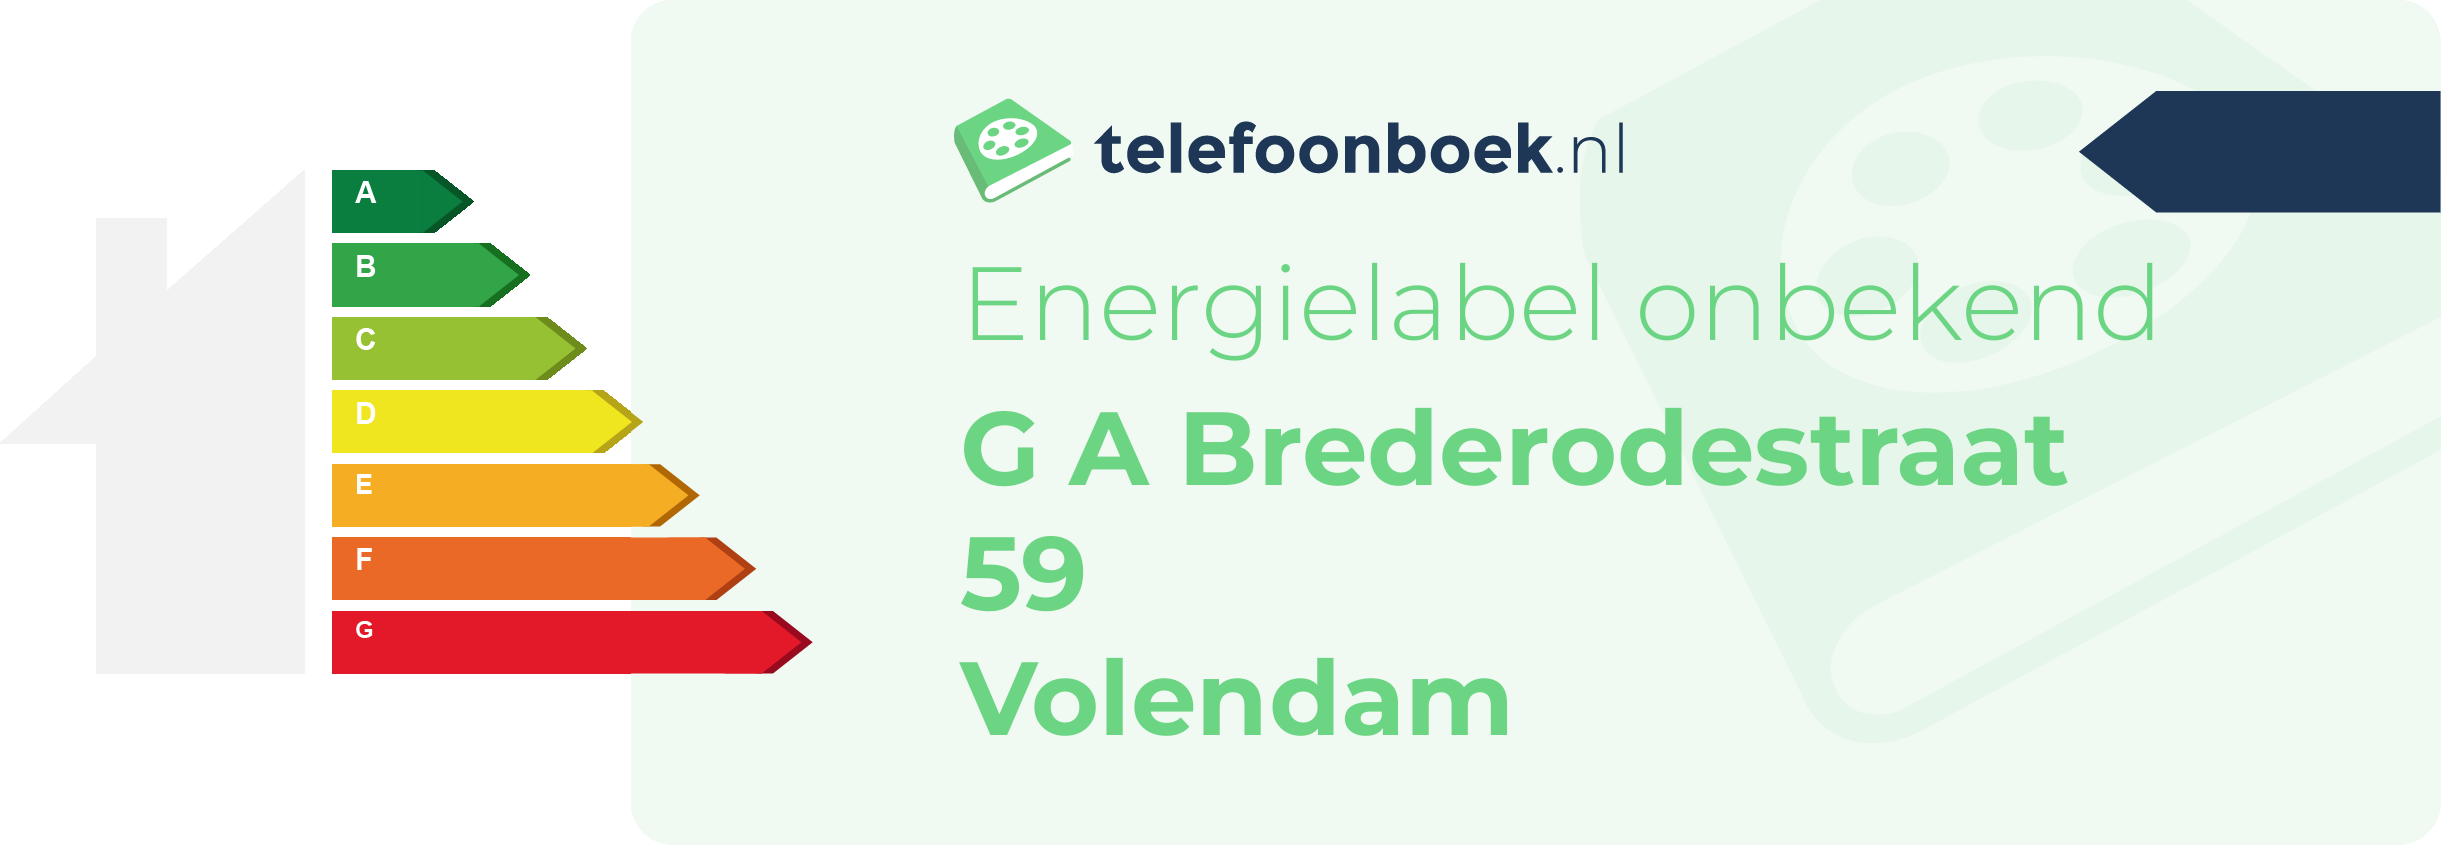 Energielabel G A Brederodestraat 59 Volendam